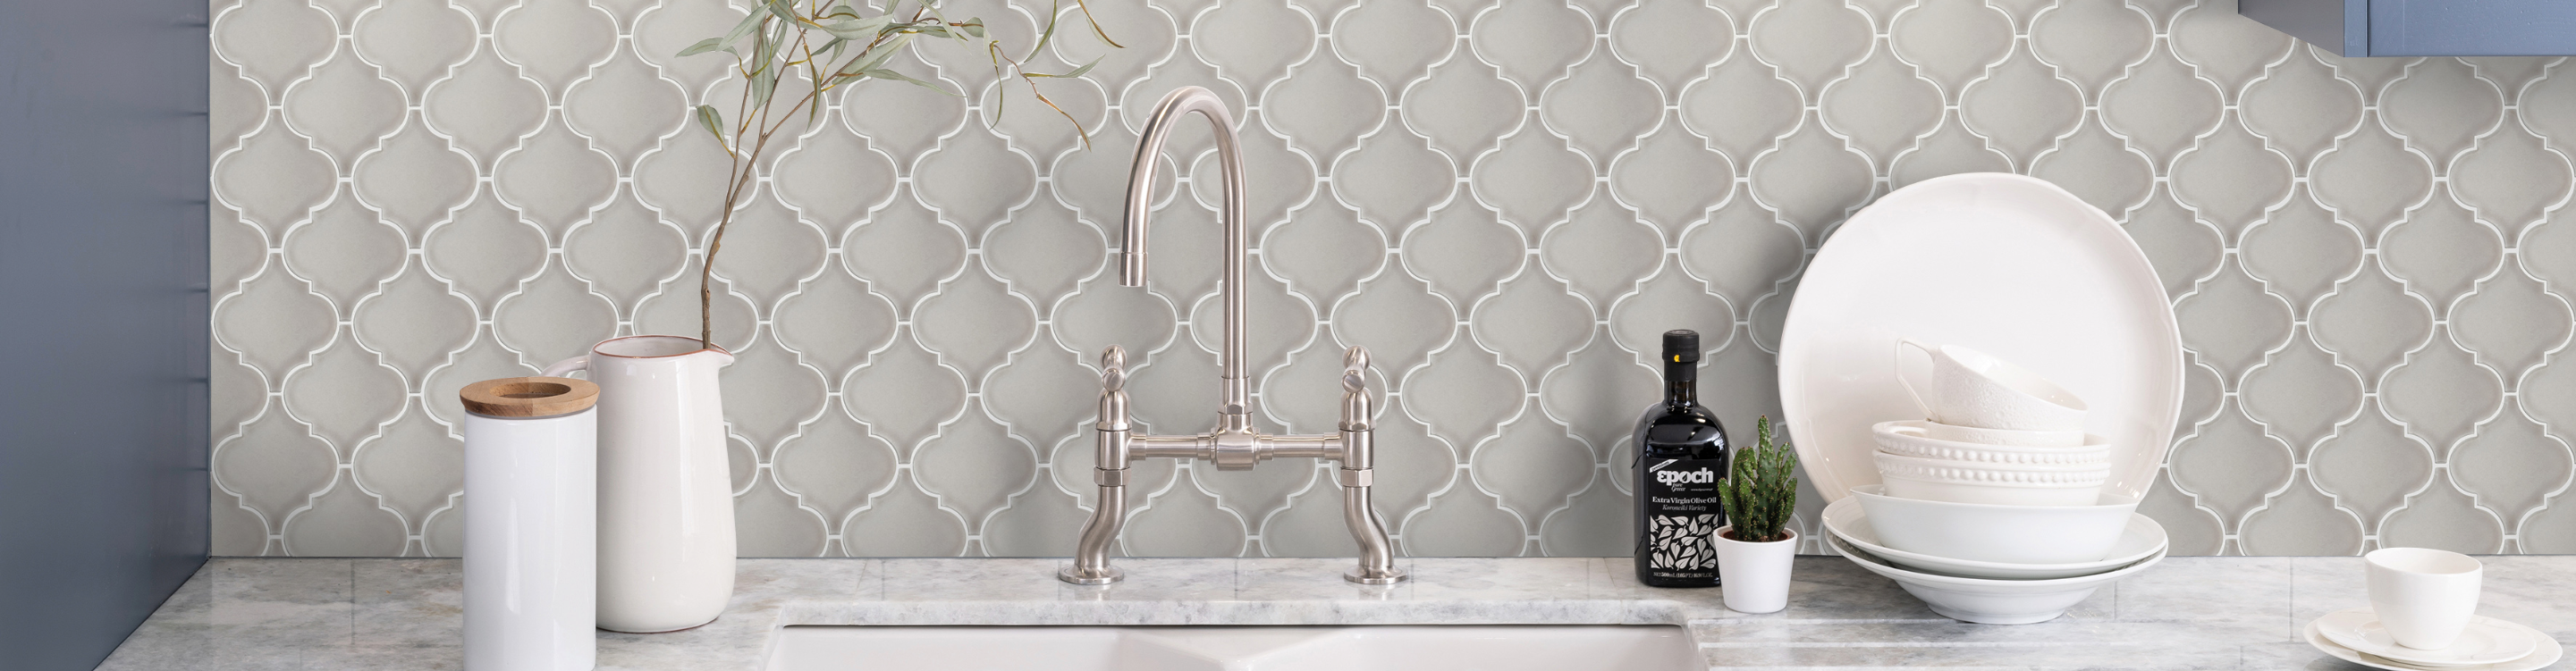 Grey backsplash tile over country style kitchen sink, 